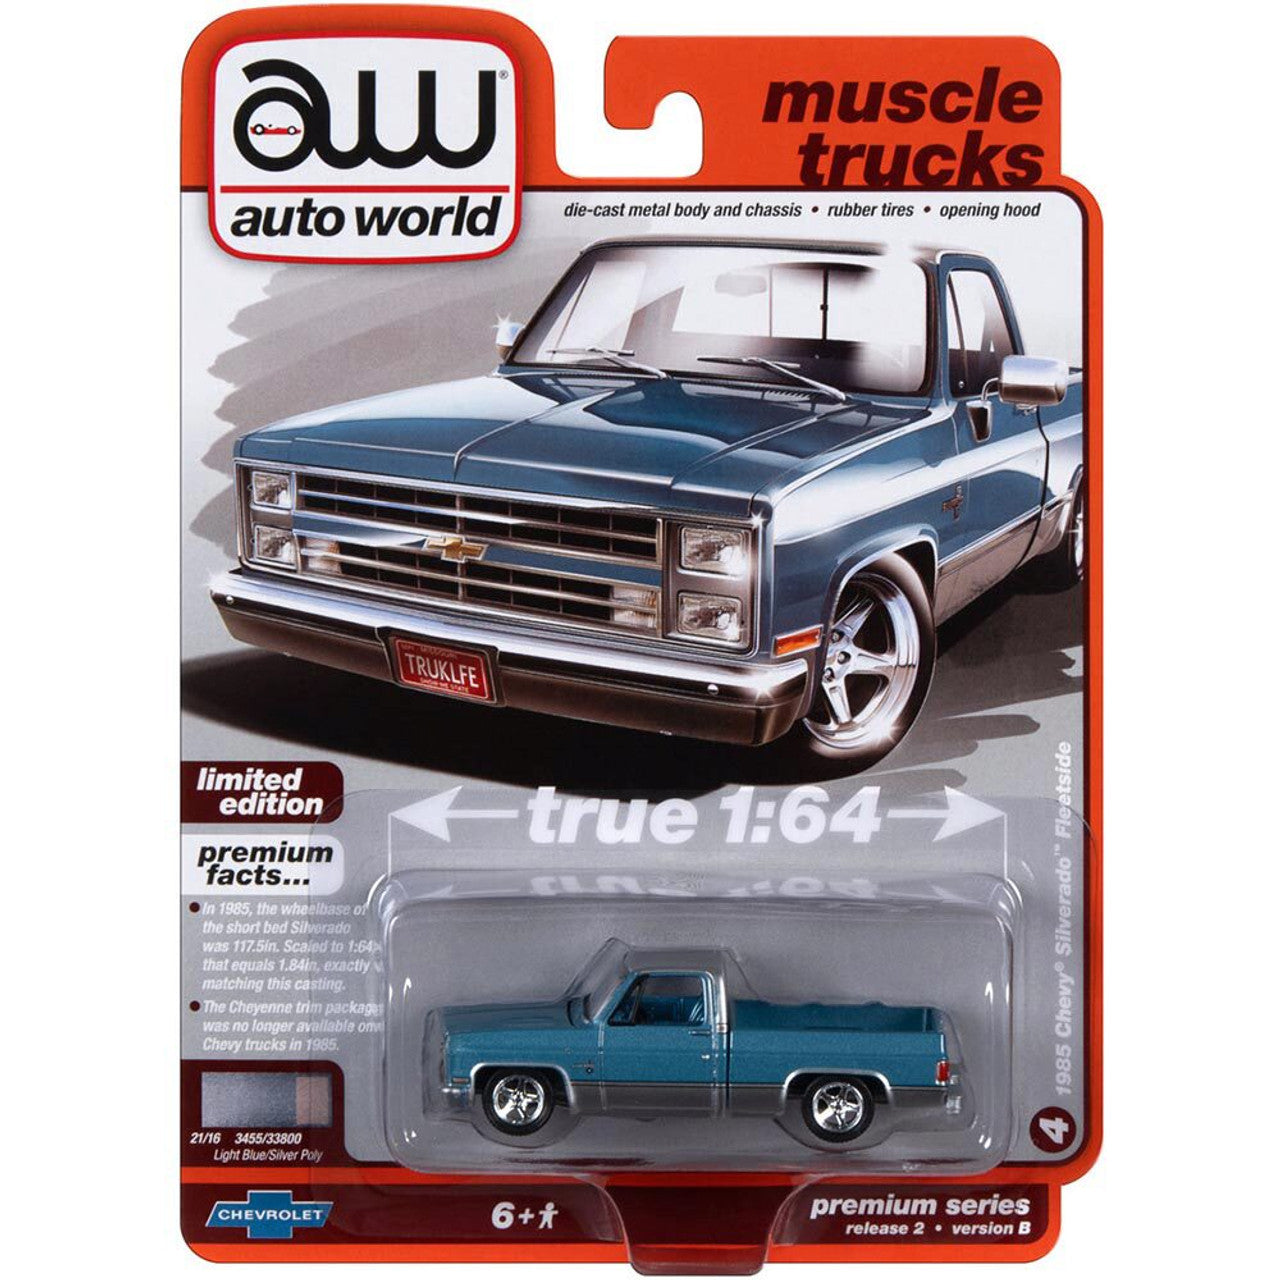 Auto World Muscle Truck 1985 Chevy Silverado Fleetside Light blue Silver Poly 1:64